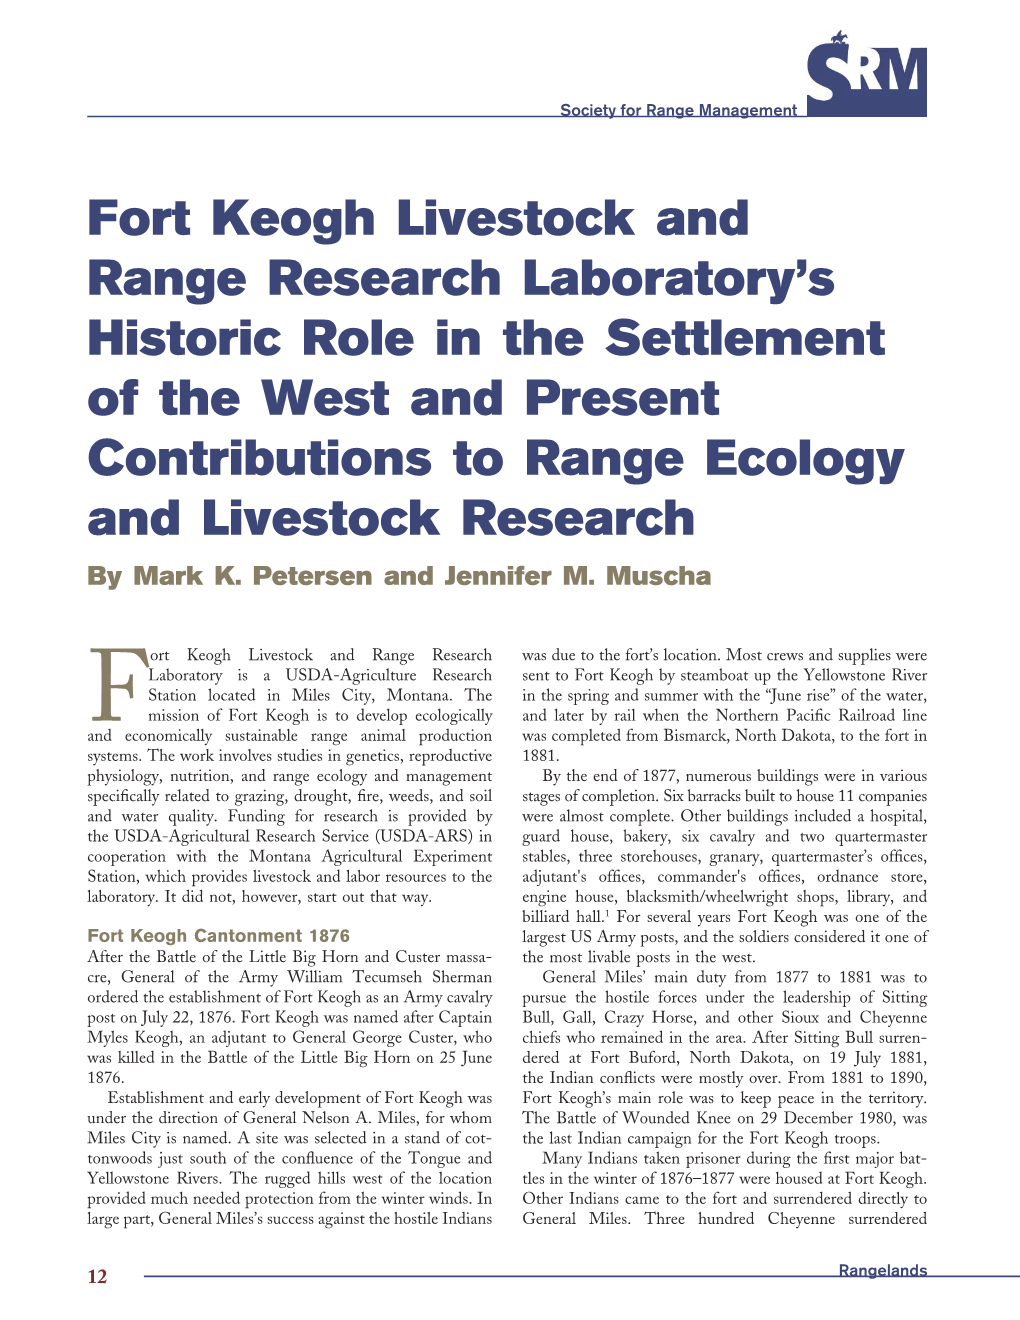 Fort Keogh Livestock and Range Research Laboratory's Historic